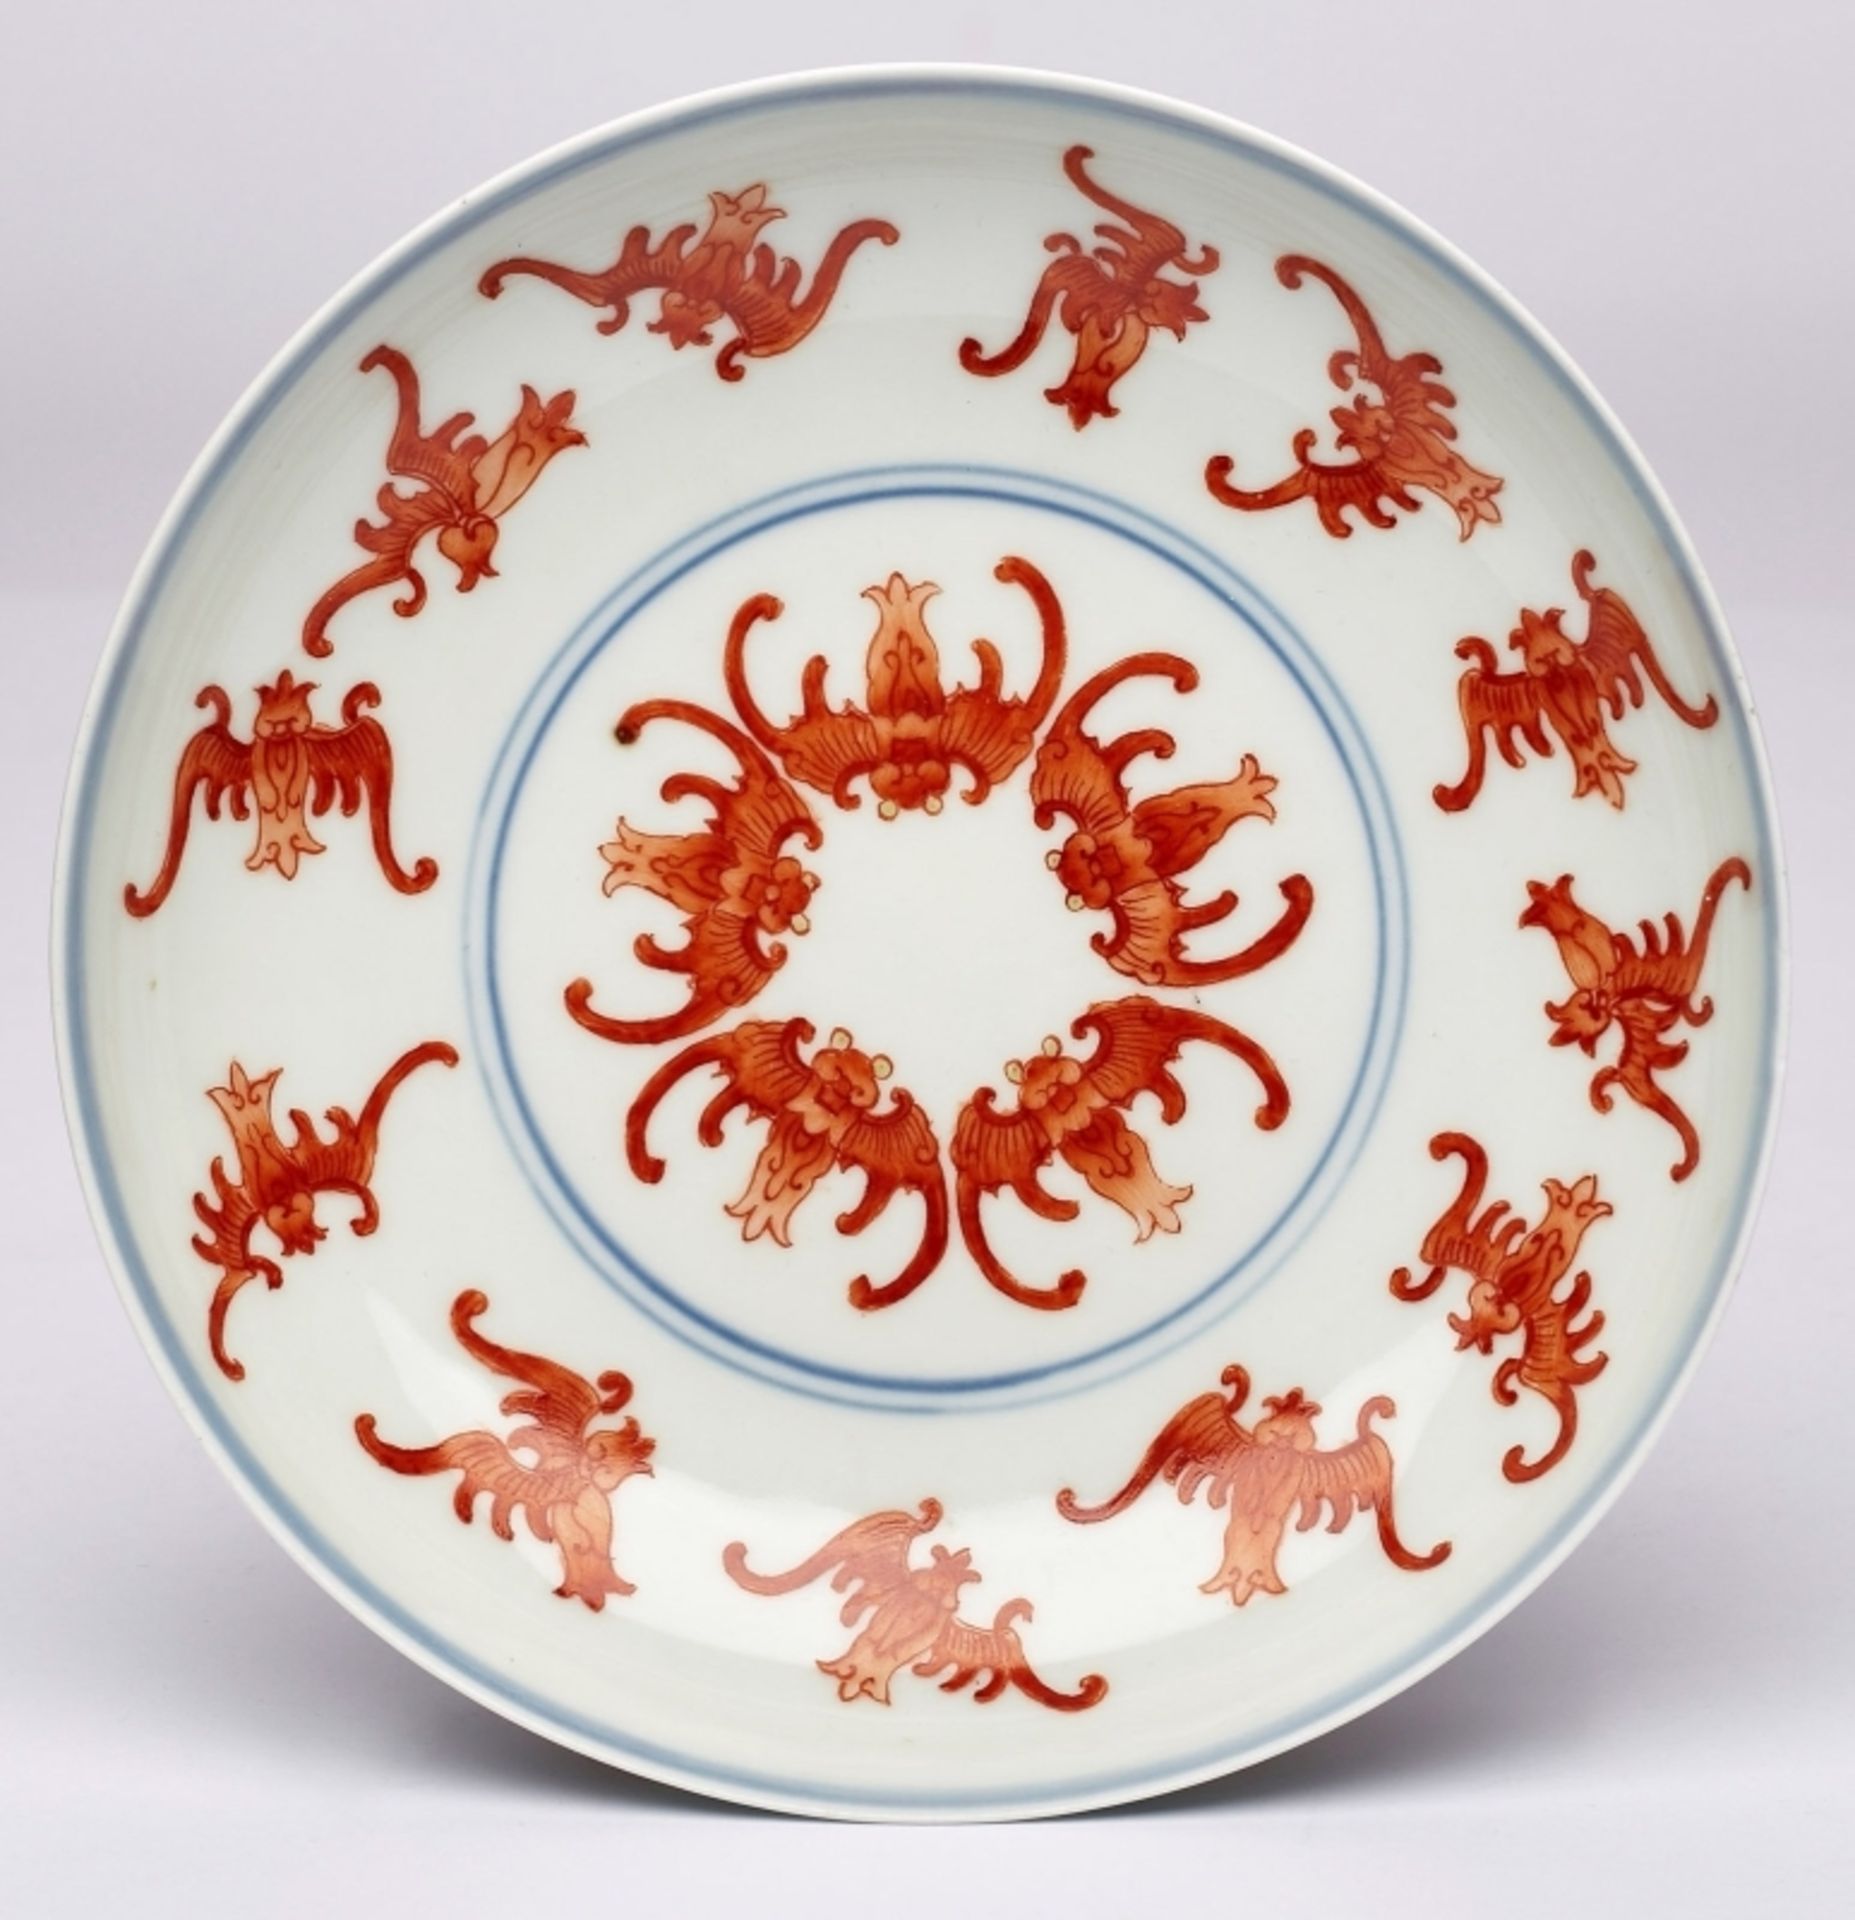 Kl. Schale mit Fledermaus-Dekor, wohl Daoguang-Periode, China 1. Hälfte 19. Jh.